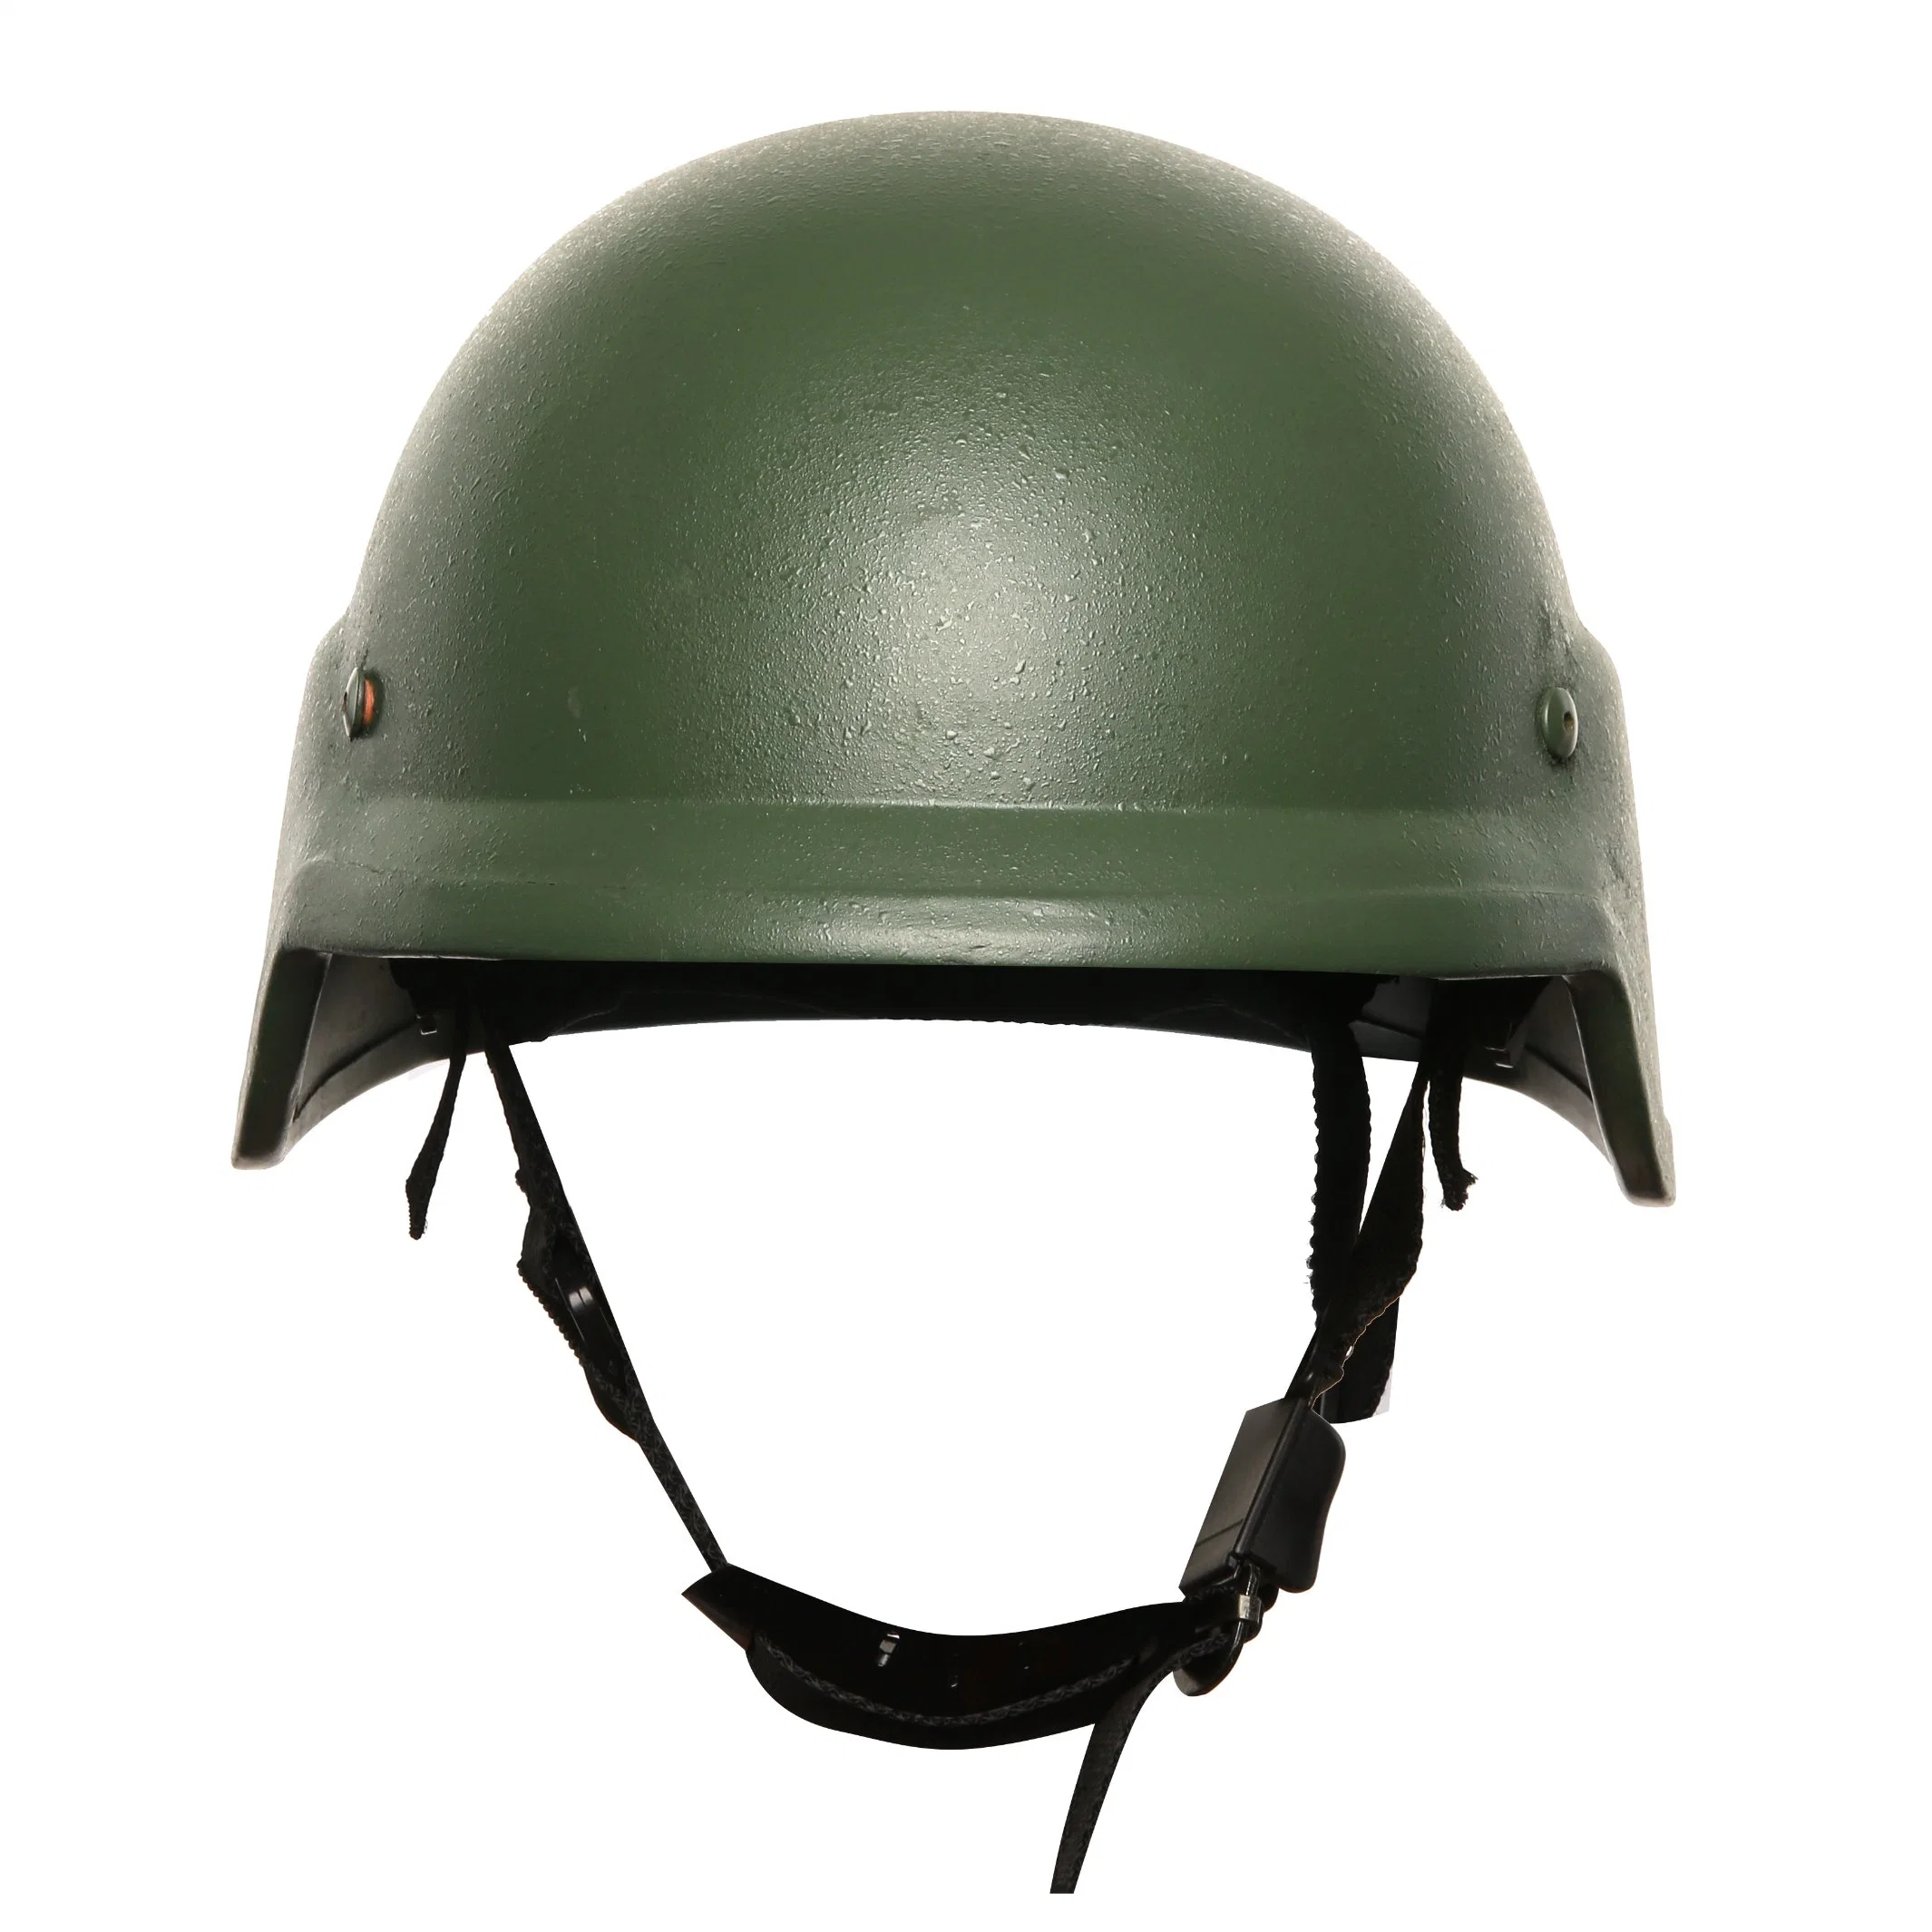 PE Aramid Army Safety Tactical Ballistic Nij Iiia Military Bulletproof Helmet Combat Bullet Proof Helmet